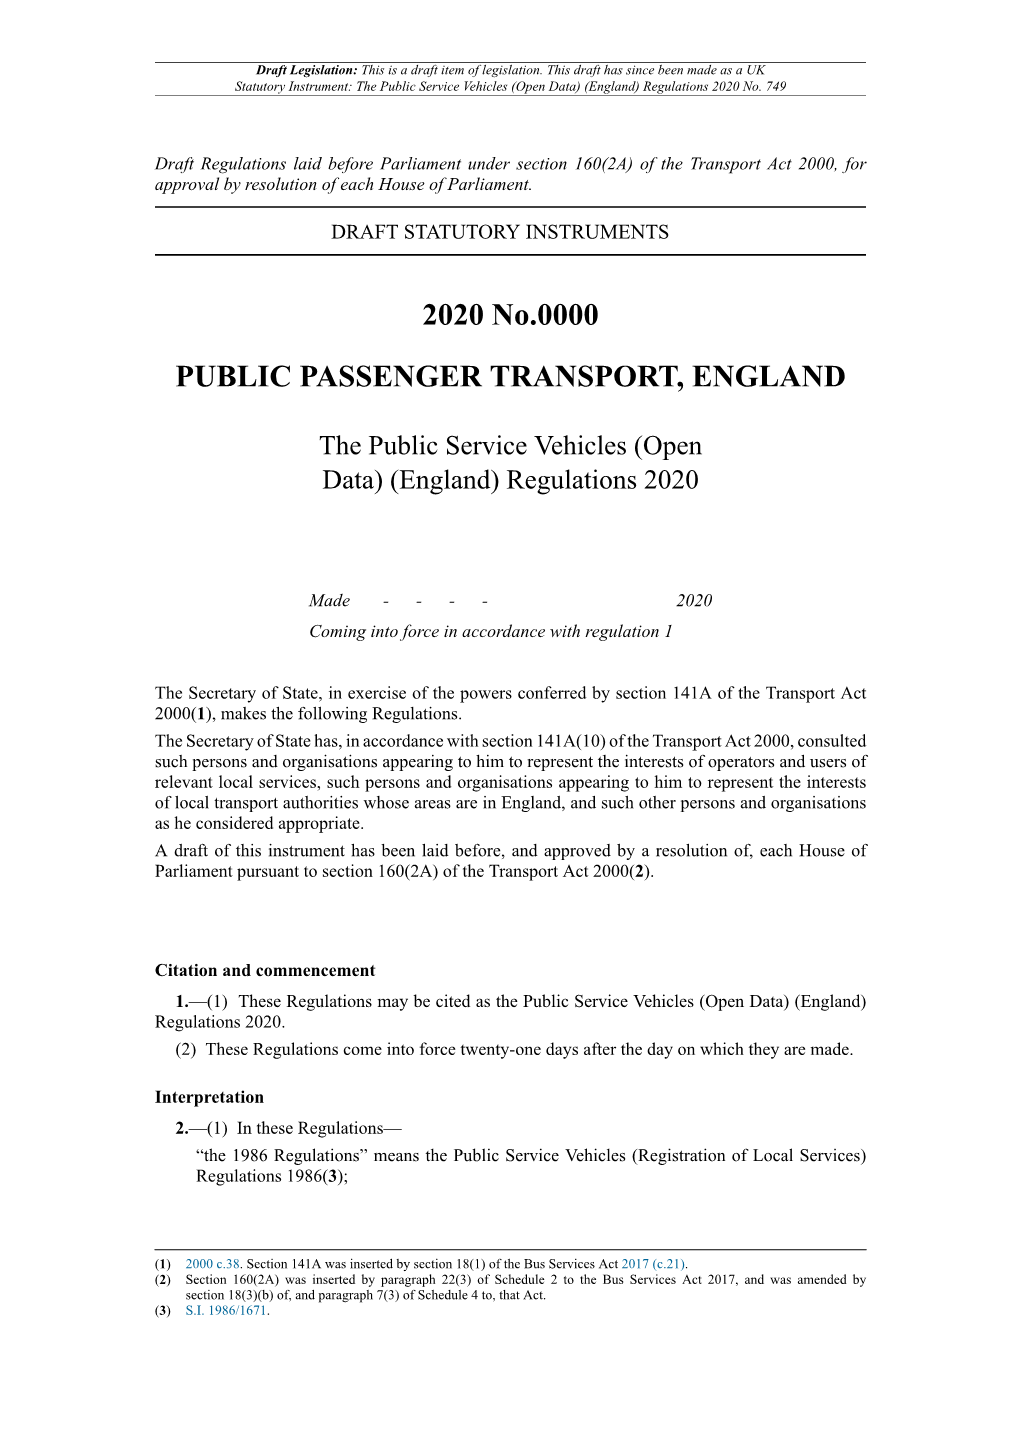 The Public Service Vehicles (Open Data) (England) Regulations 2020 No